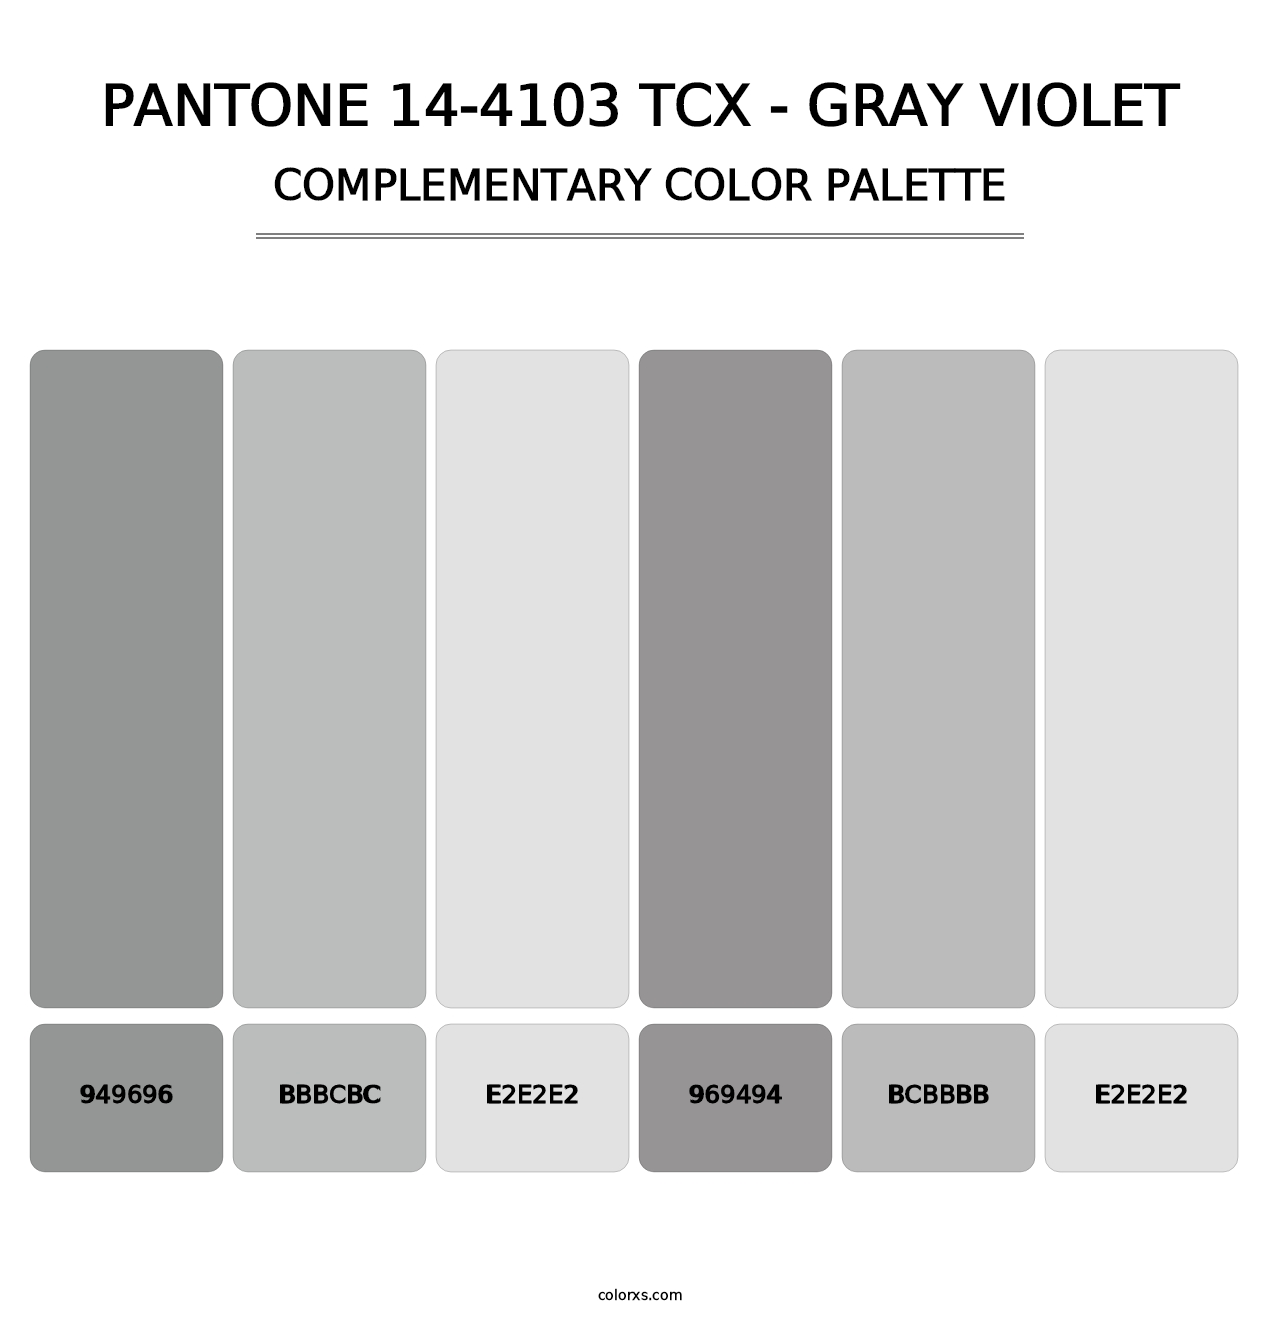 PANTONE 14-4103 TCX - Gray Violet - Complementary Color Palette